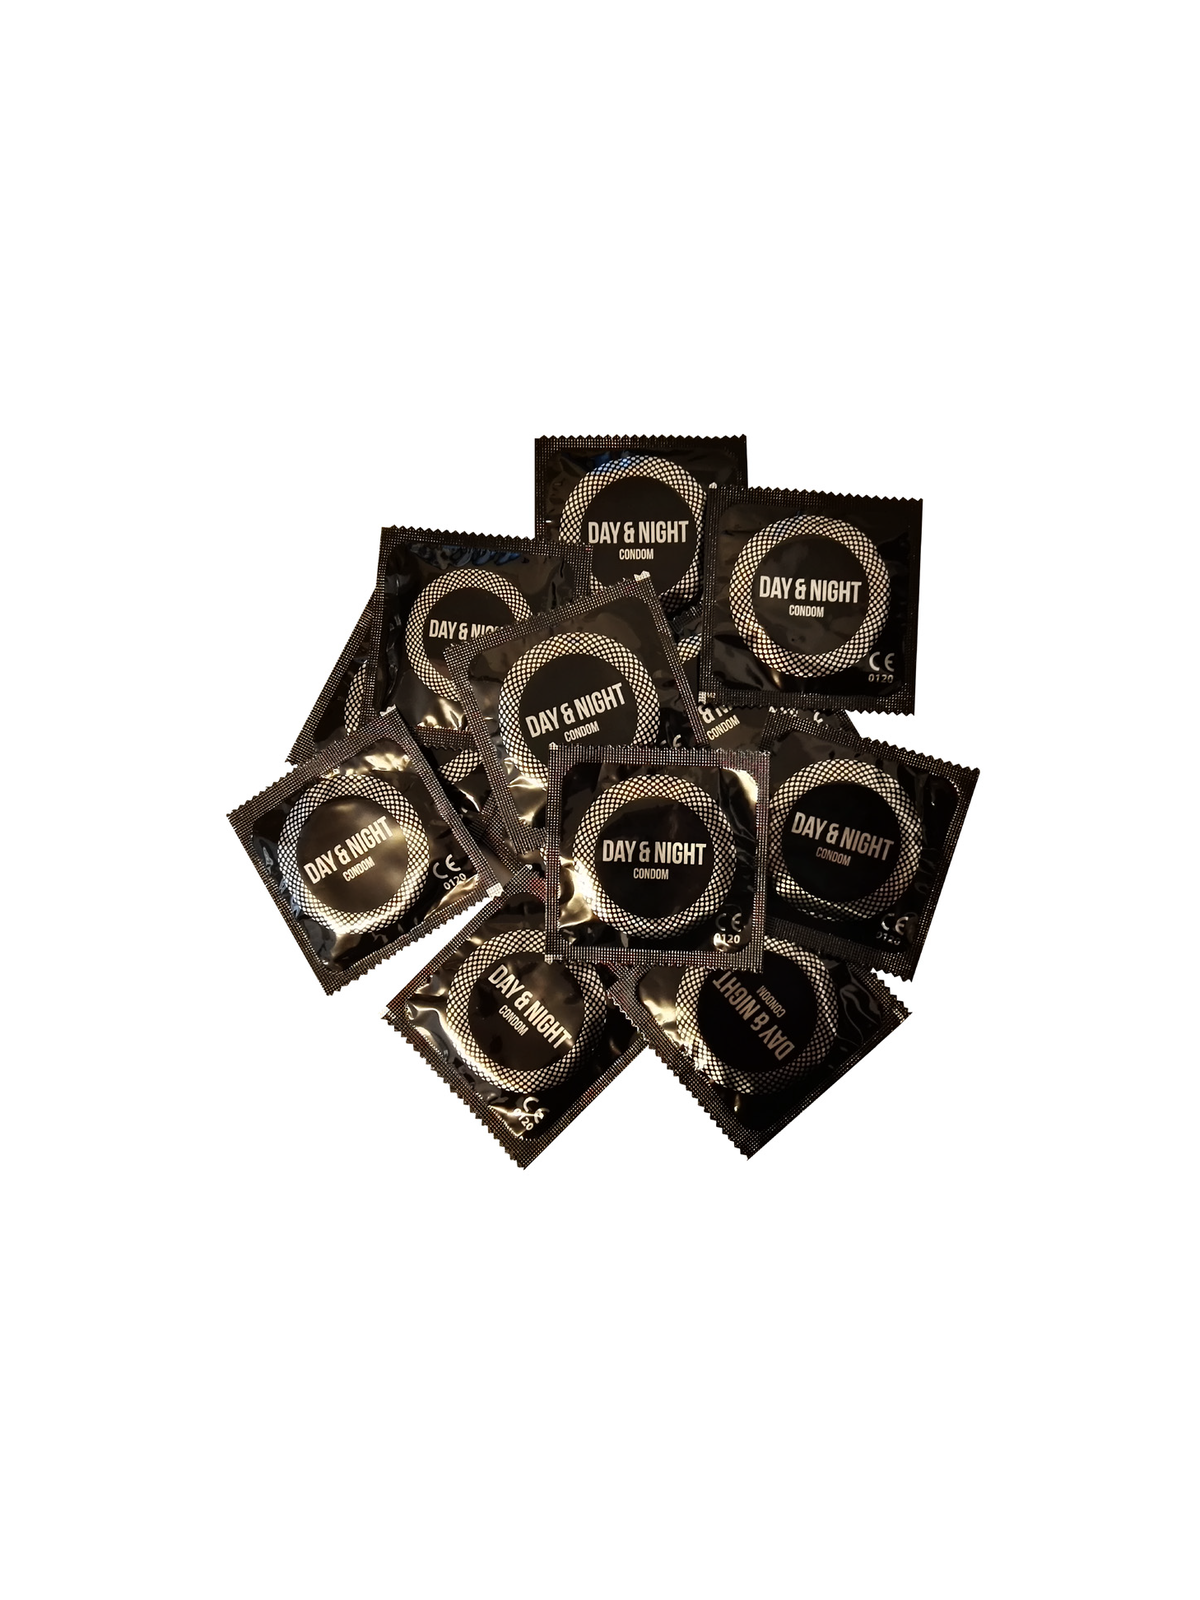 Day And Night Preservativos 100 uds - Comprar Condones naturales Day And Night - Preservativos naturales (1)